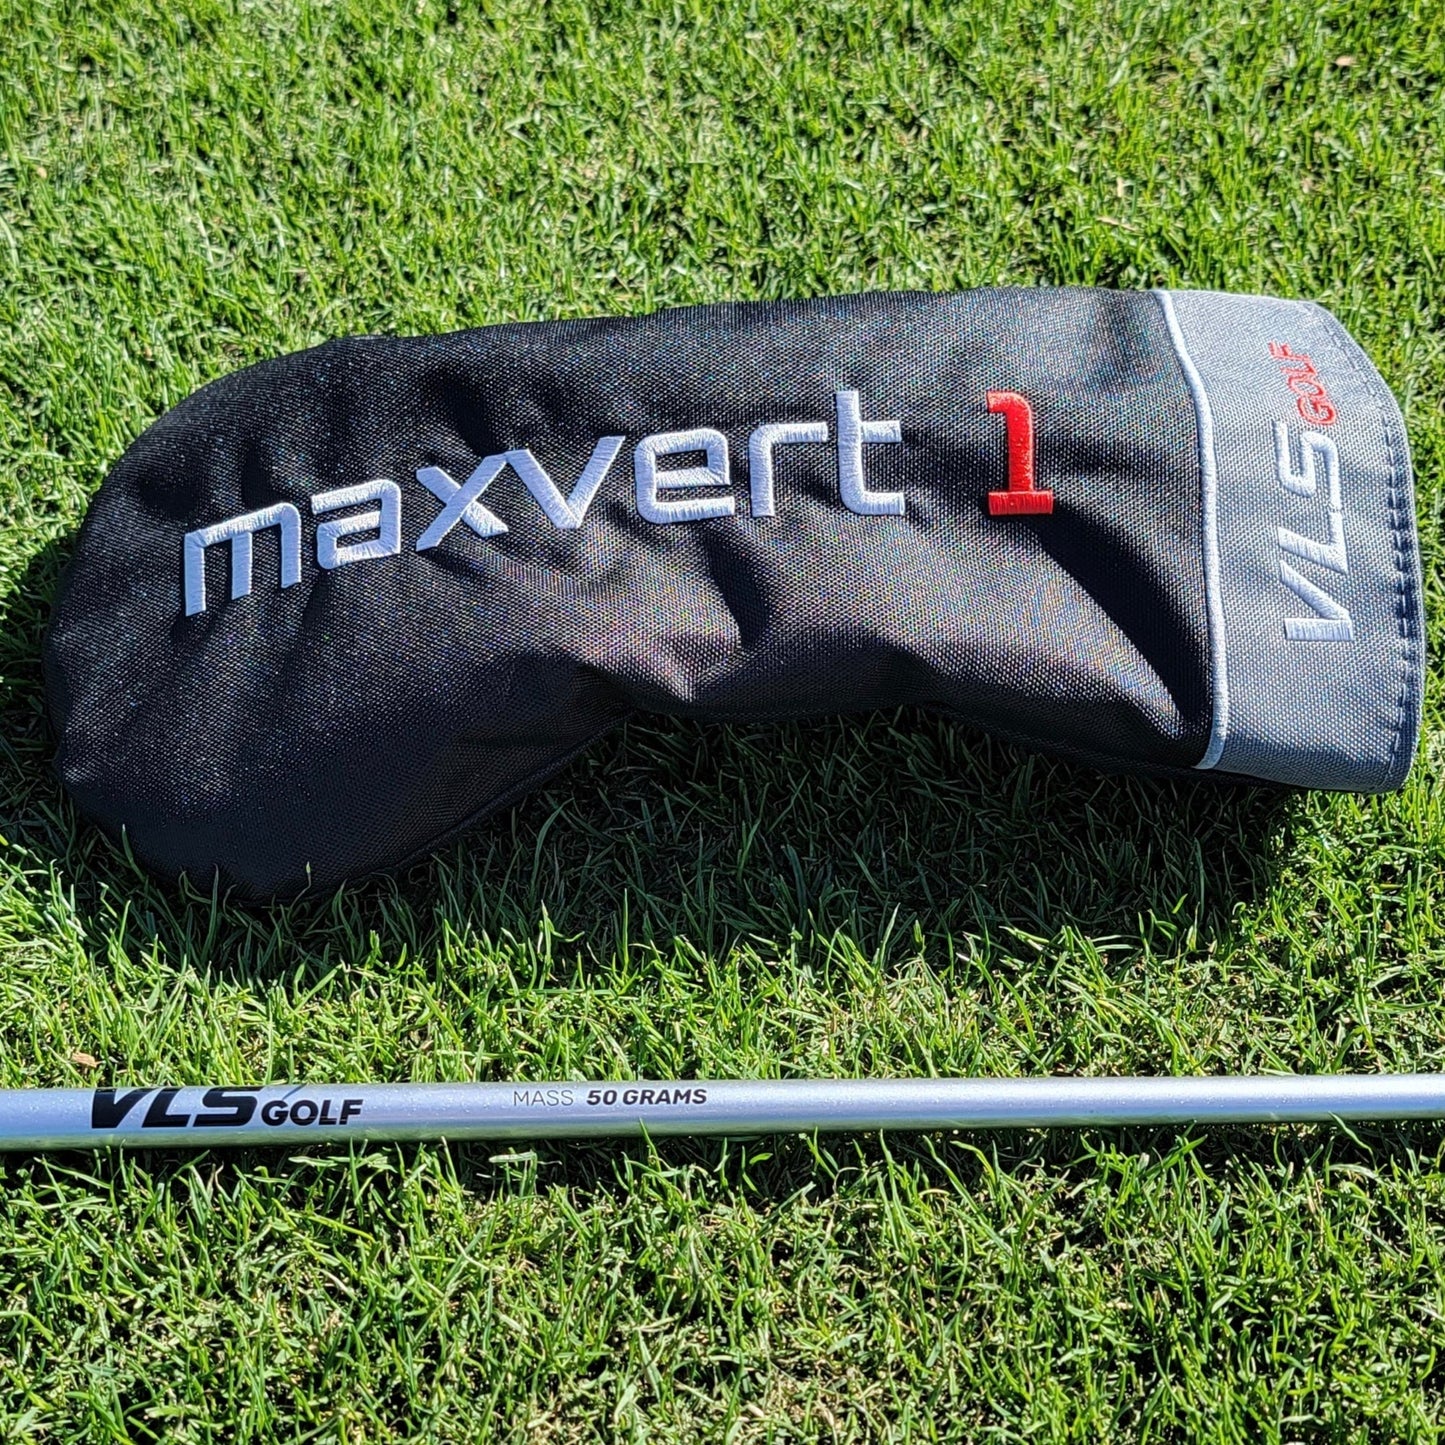 VLS Maxvert 1 Driver Bundle w/ Free Alignment Rods Deal